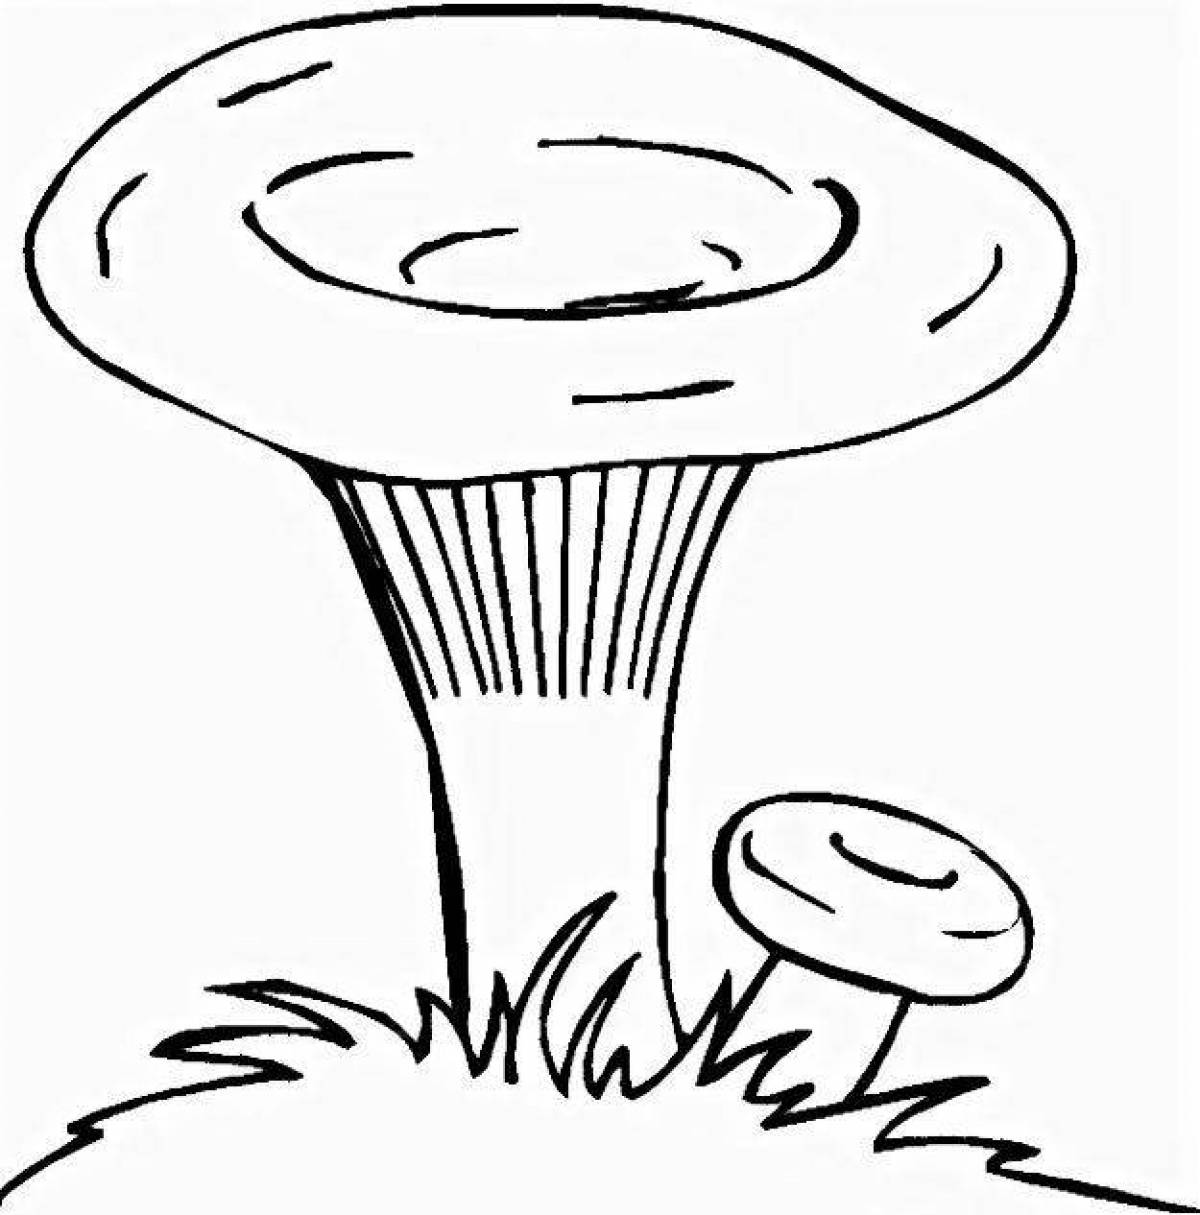 Раскраска гриб сыроежка